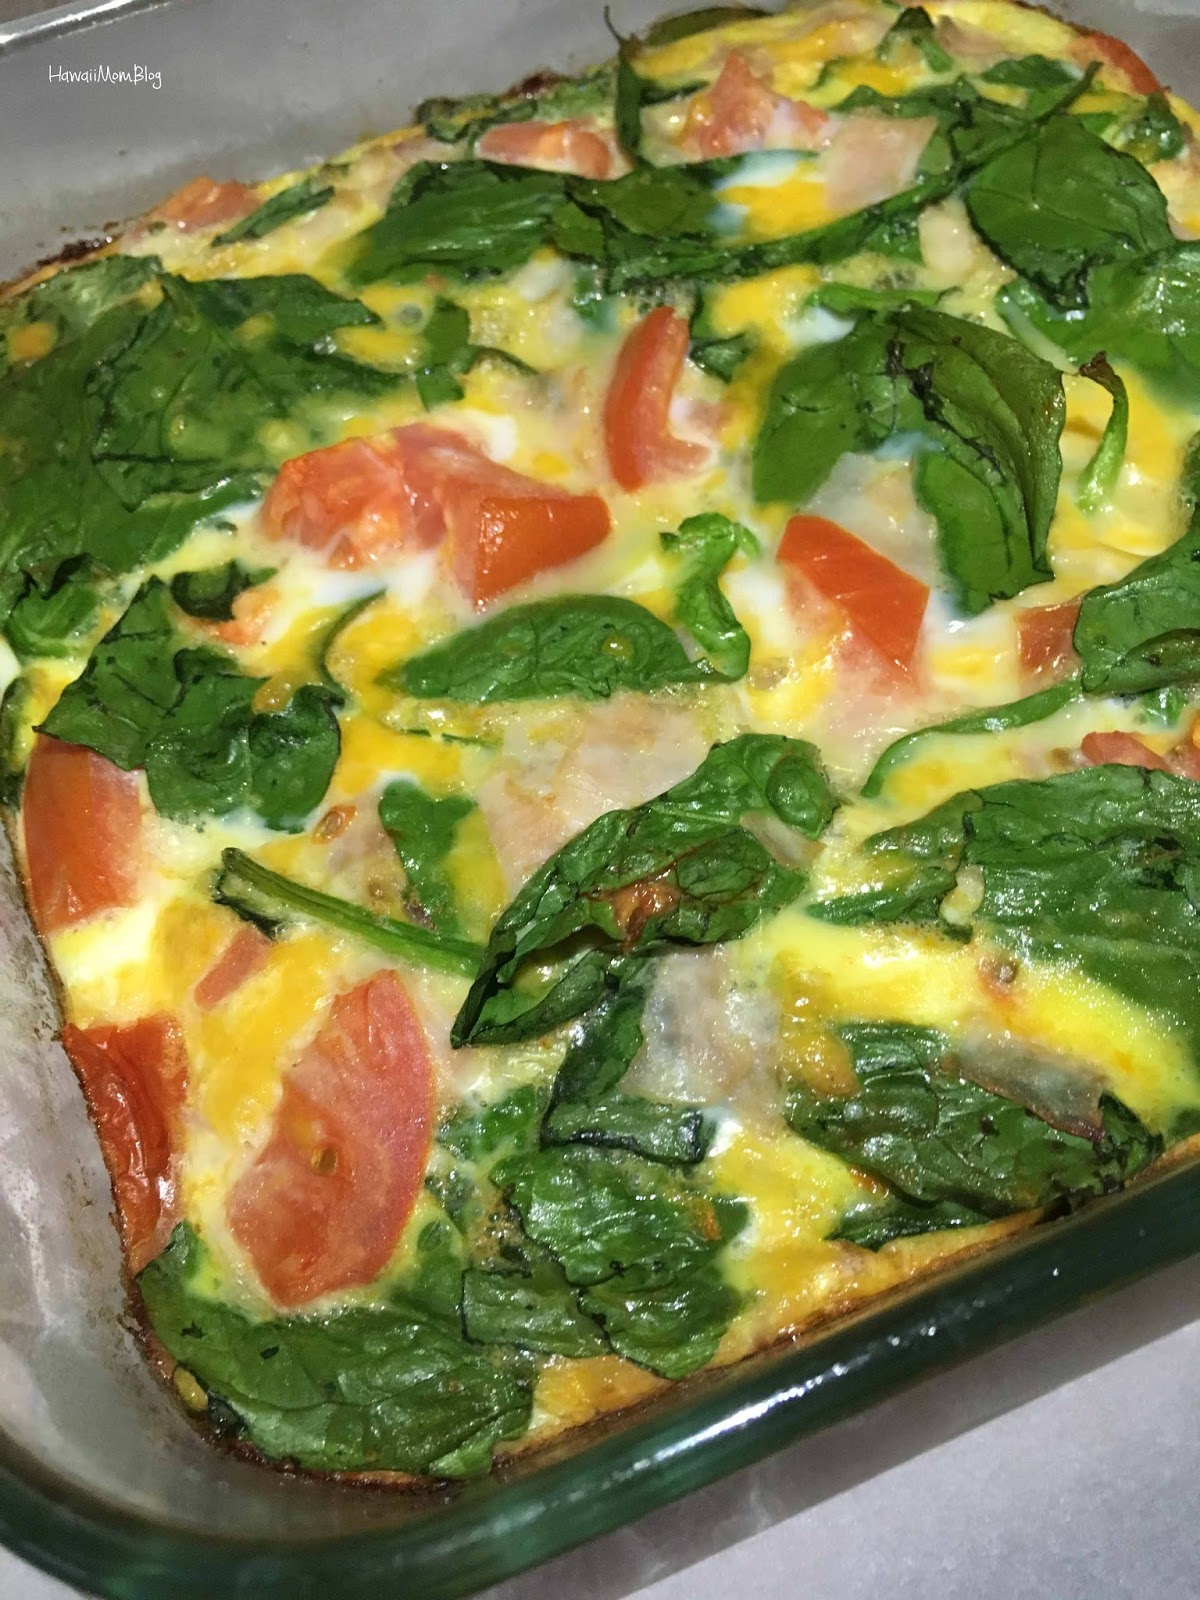 Hawaii Mom Blog: Breakfast Casserole Recipe